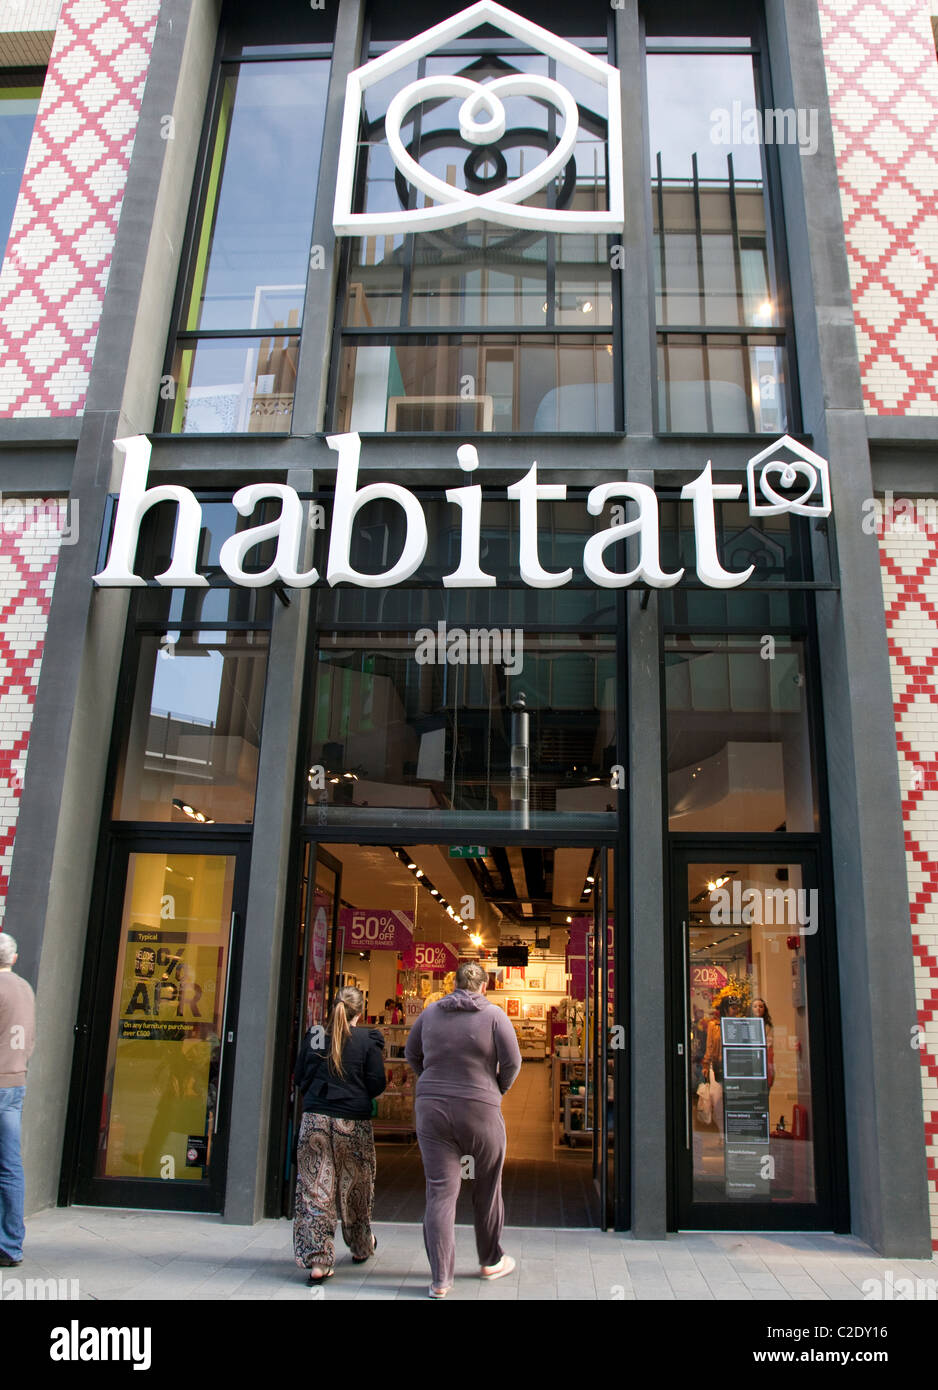 Habitat store, Liverpool One shopping centre Stock Photo